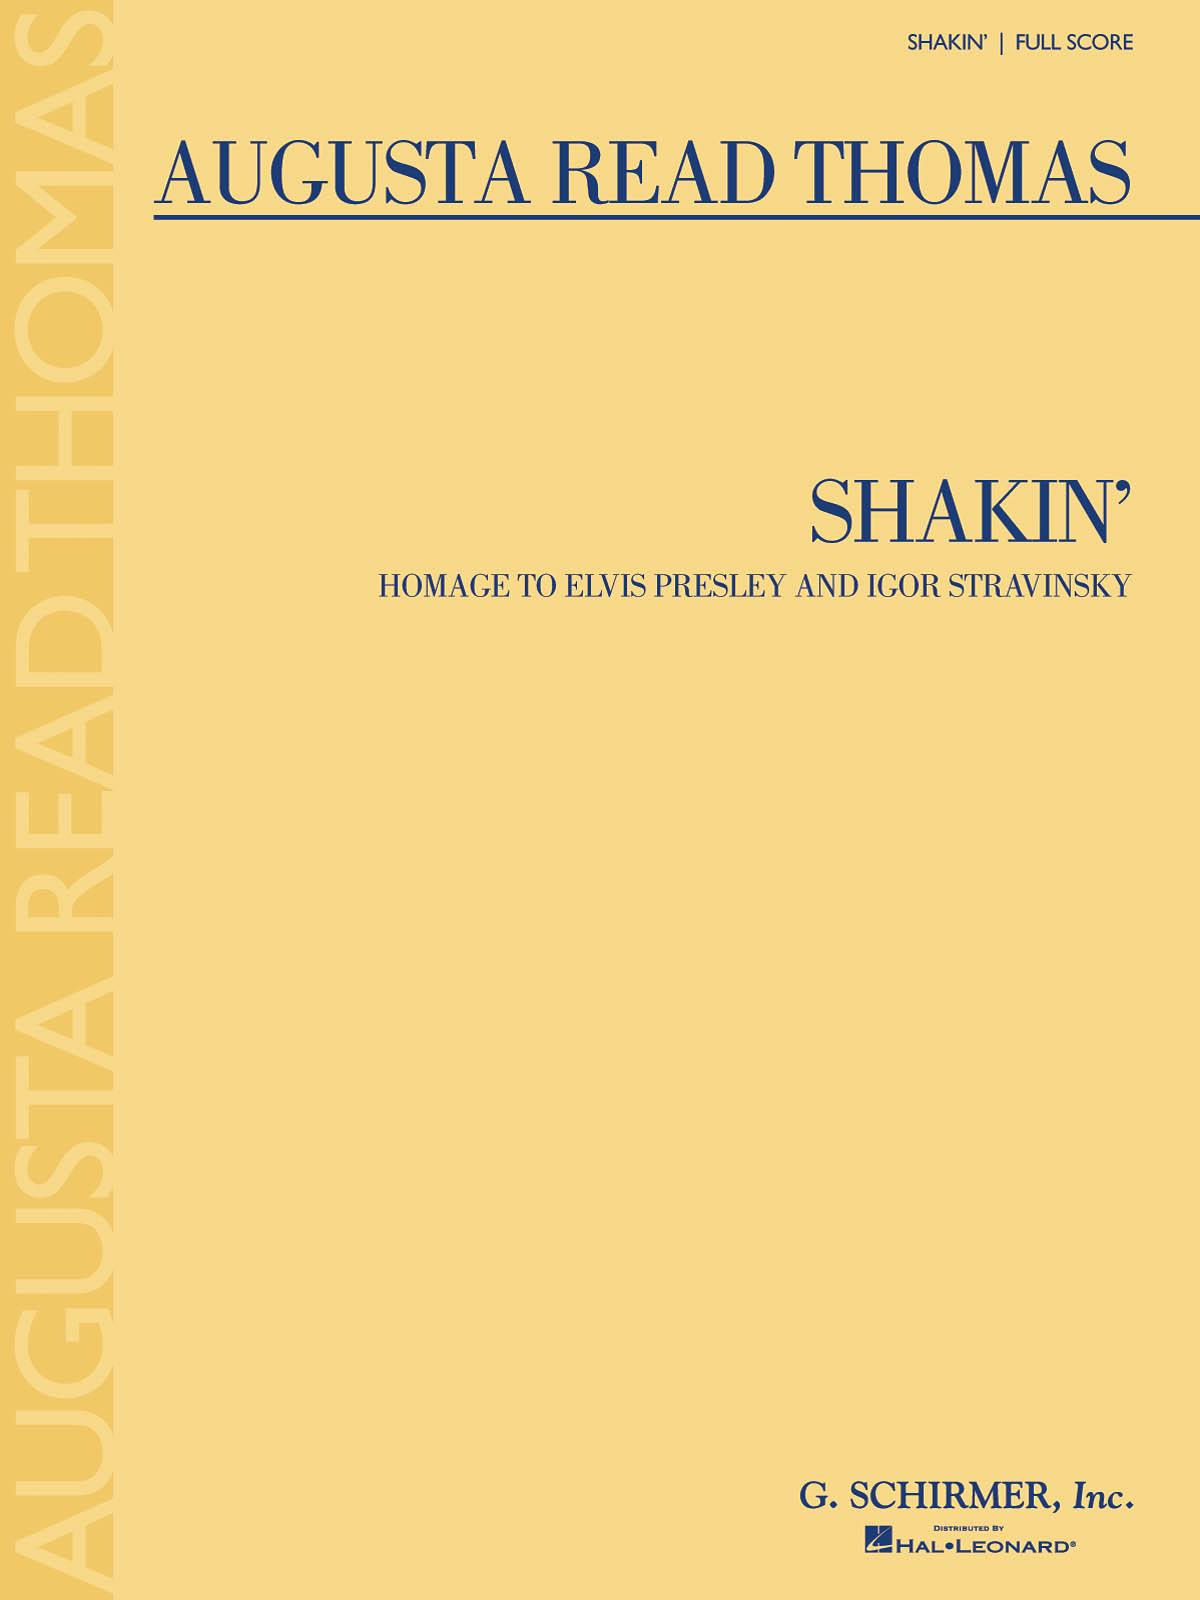 Augusta Read Thomas: Shakin' (Homage To Elvis Presley And Igor Stravinsky) - Ful